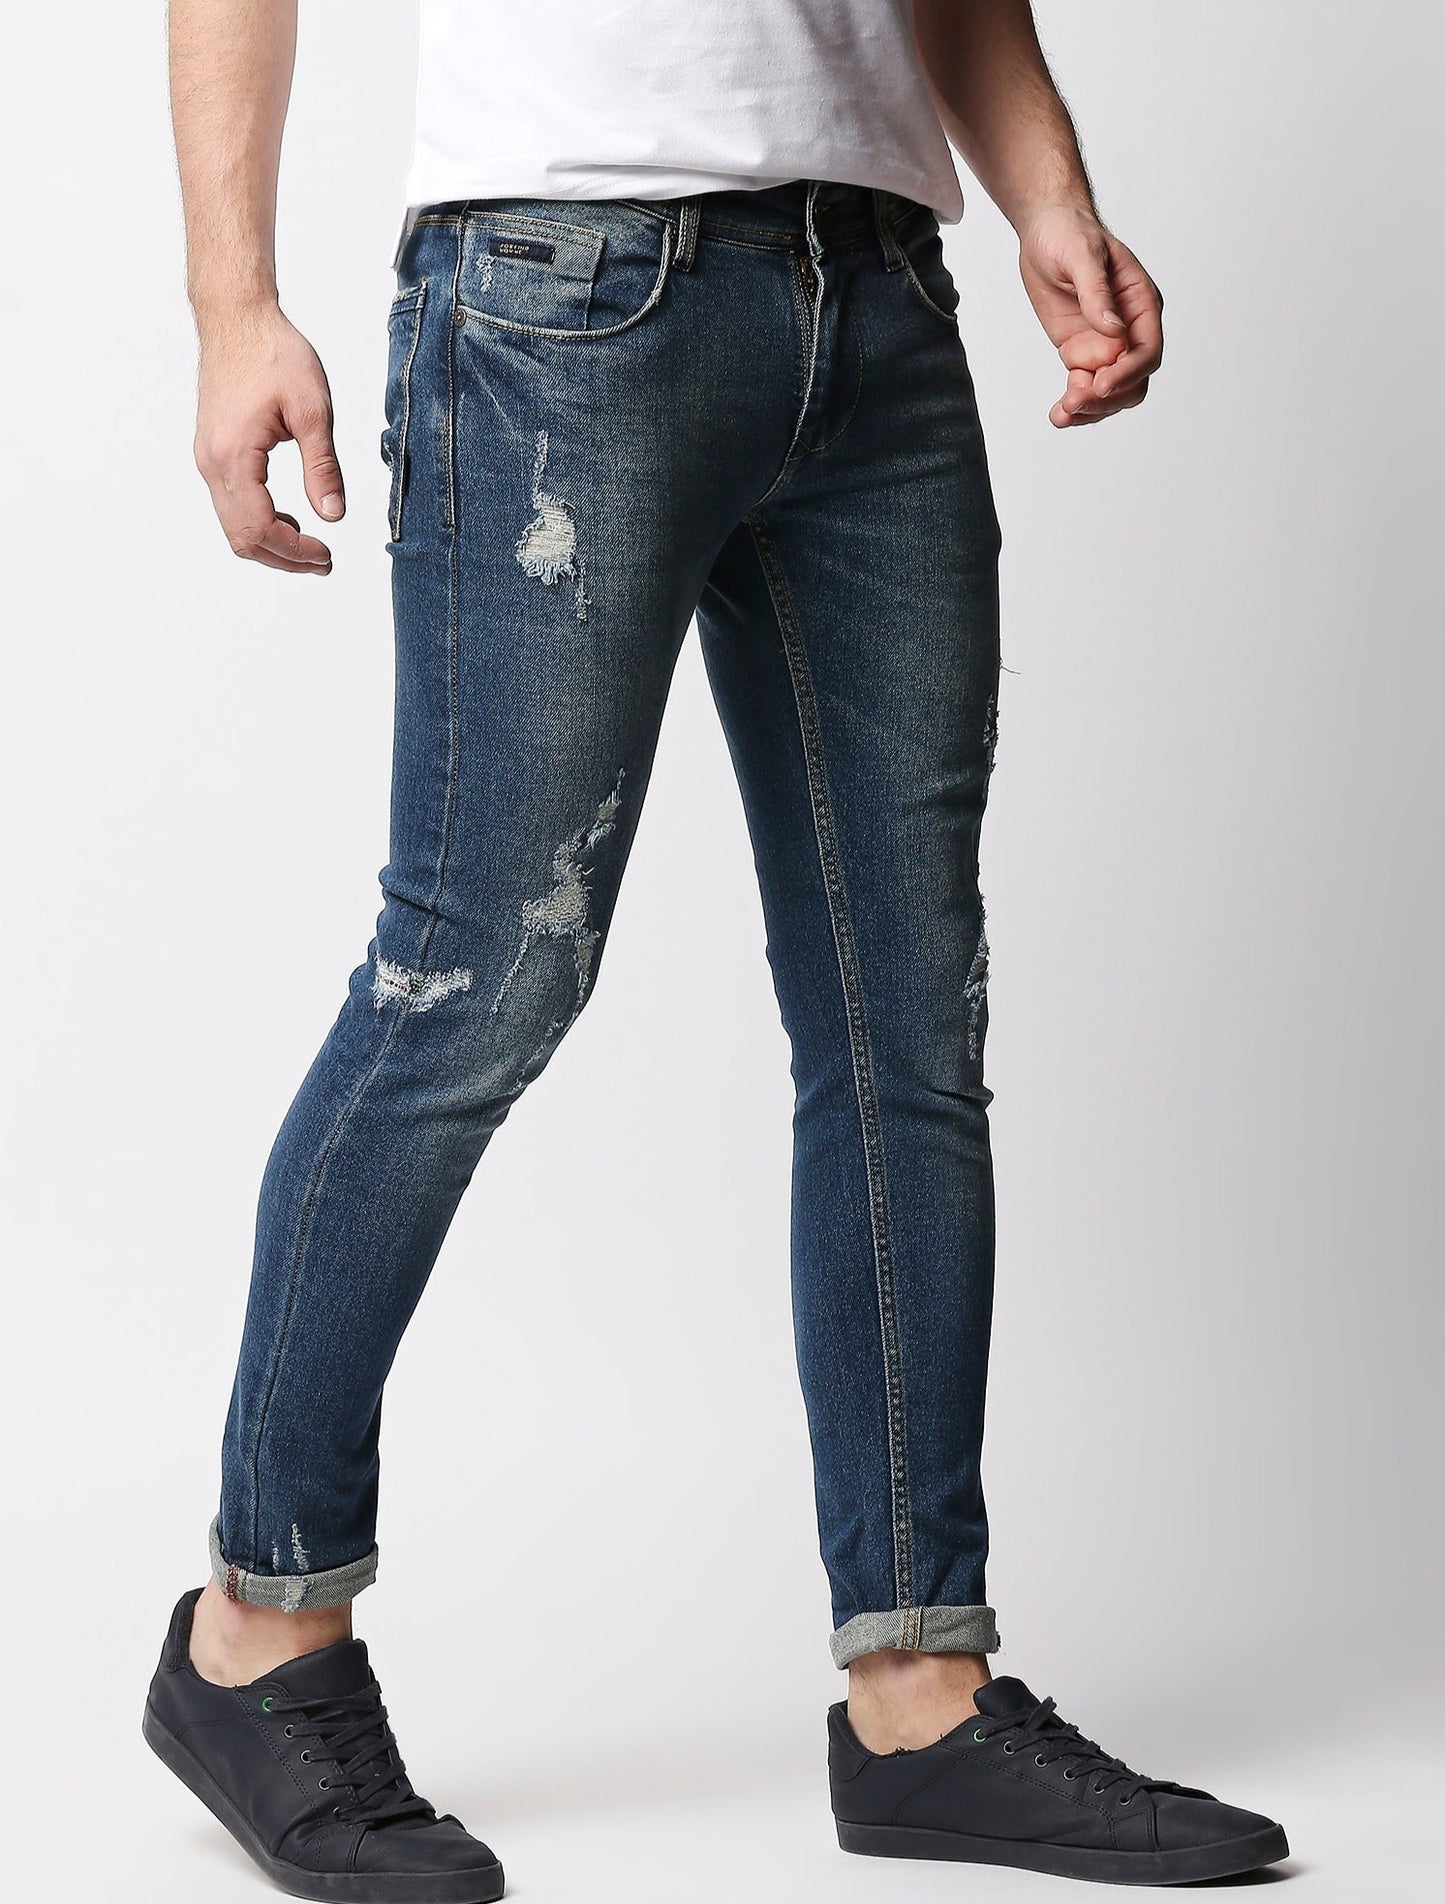 Fostino Tint Blue Distress Vintage Wash Jeans - Fostino - jeans